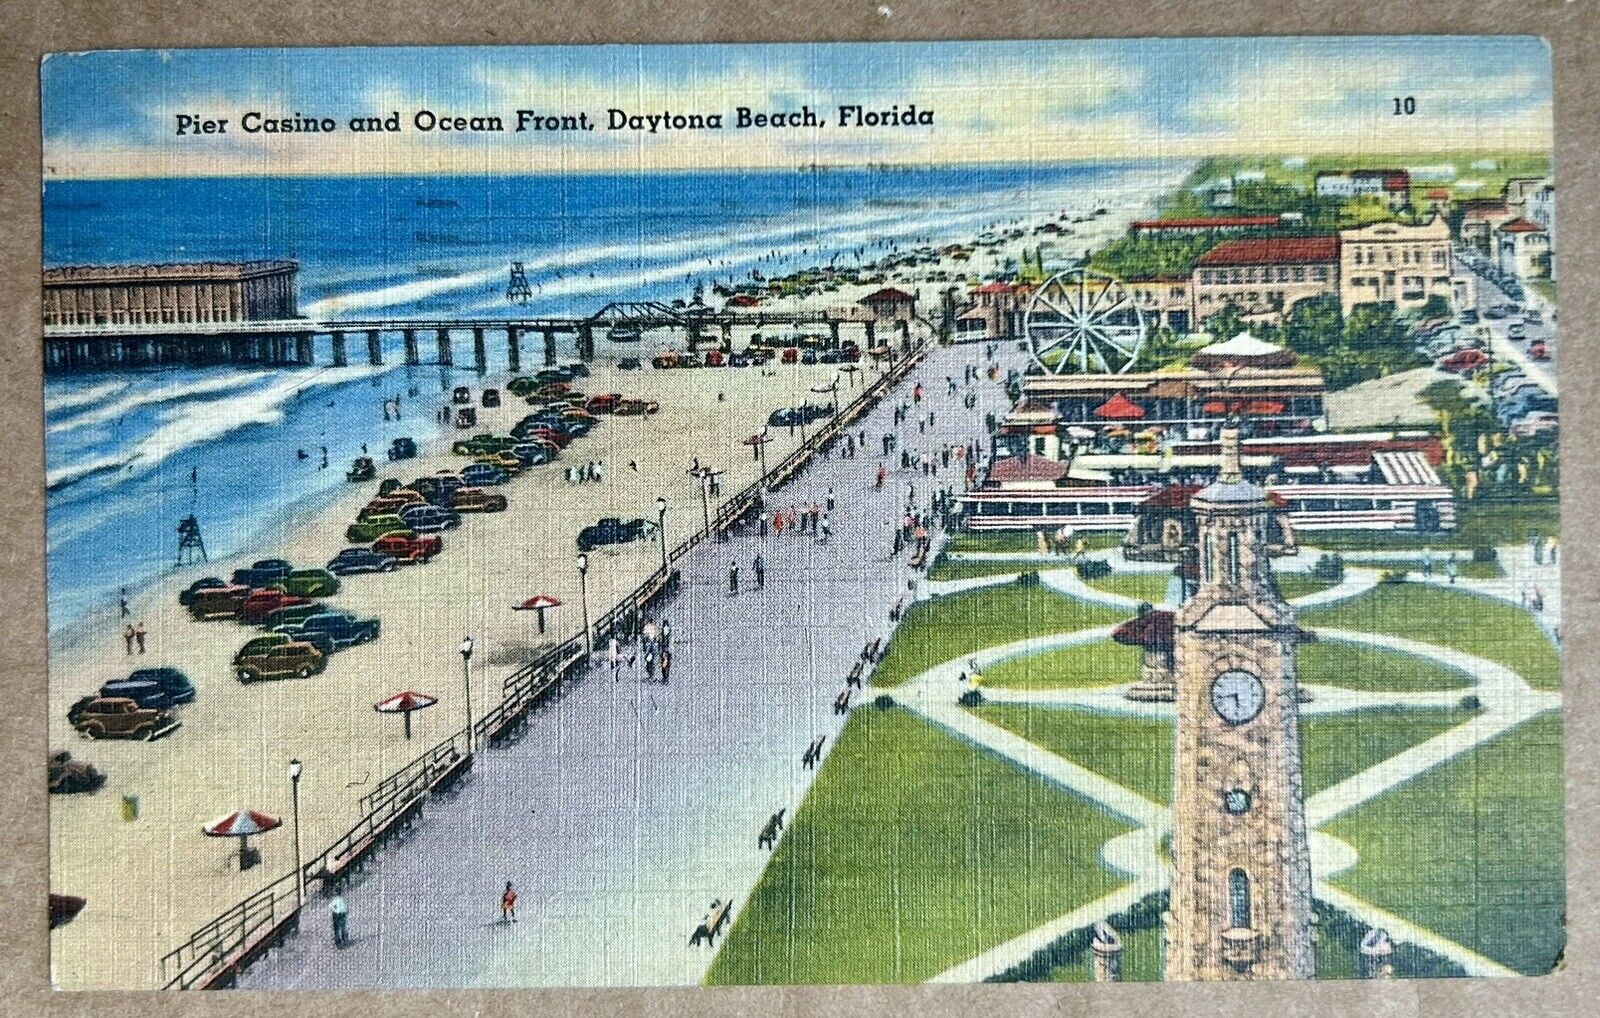 Pier Casino and Ocean Front, Daytona Beach, Florida. 1946 Vintage Postcard